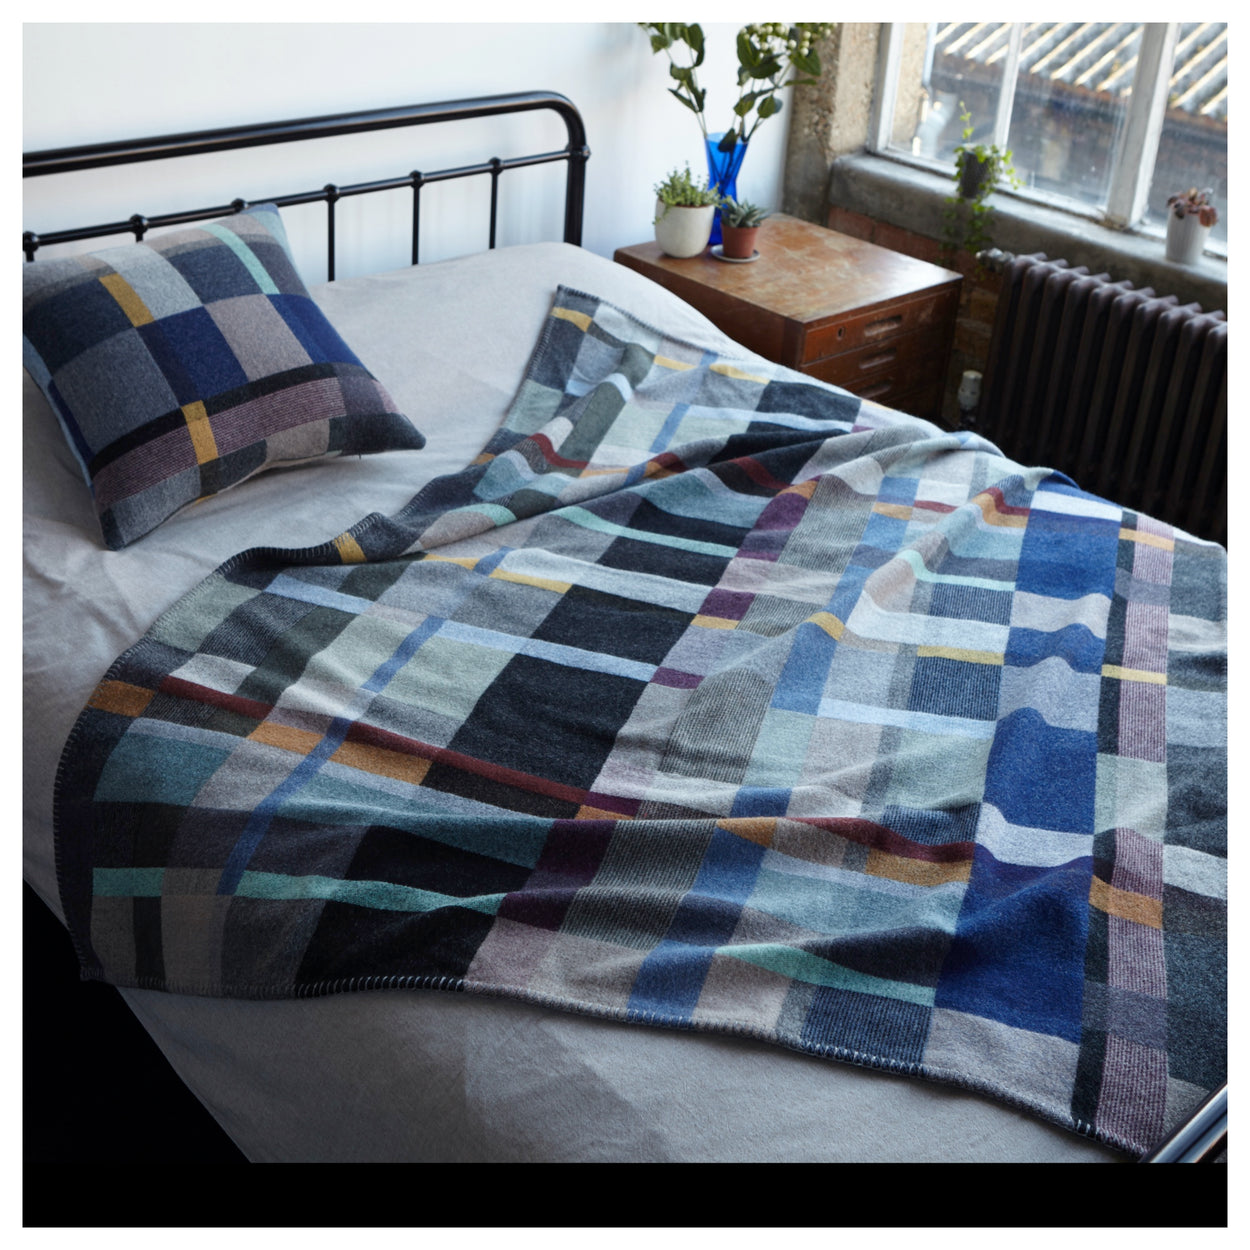 Premium Merino Lambswool throw blanket - Erno Blue, Grey & Grape block on bed